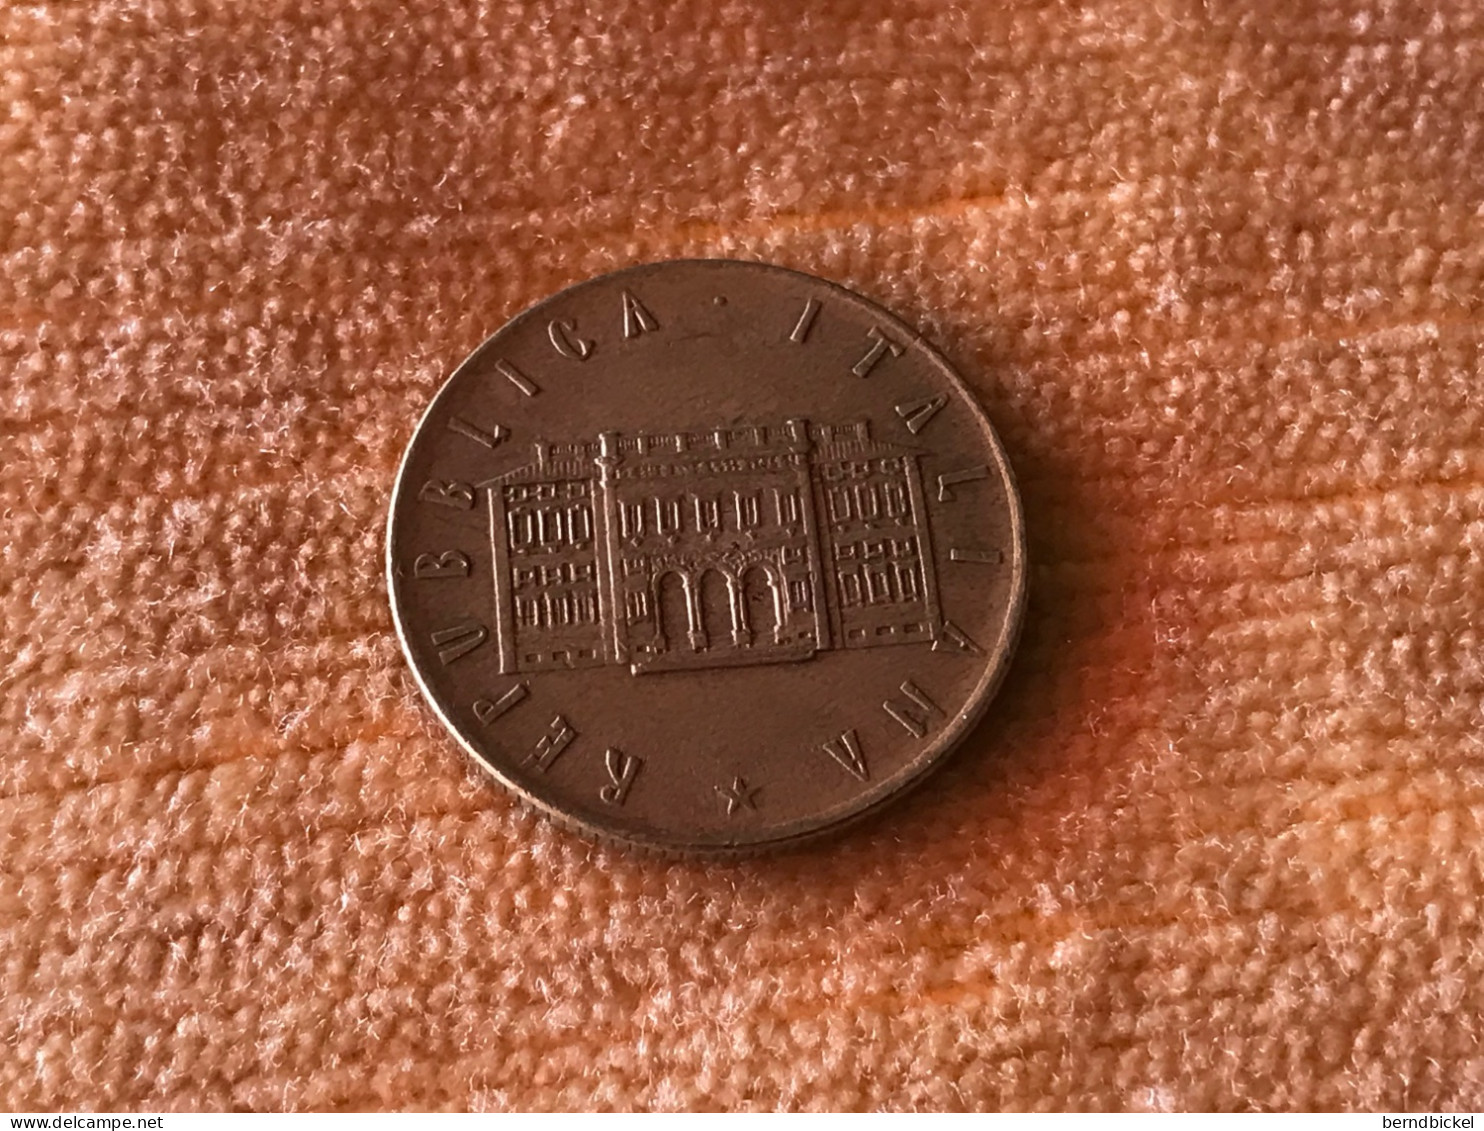 Münze Münzen Umlaufmünze Gedenkmünze Italien 200 Lire 1981 FAO - Herdenking